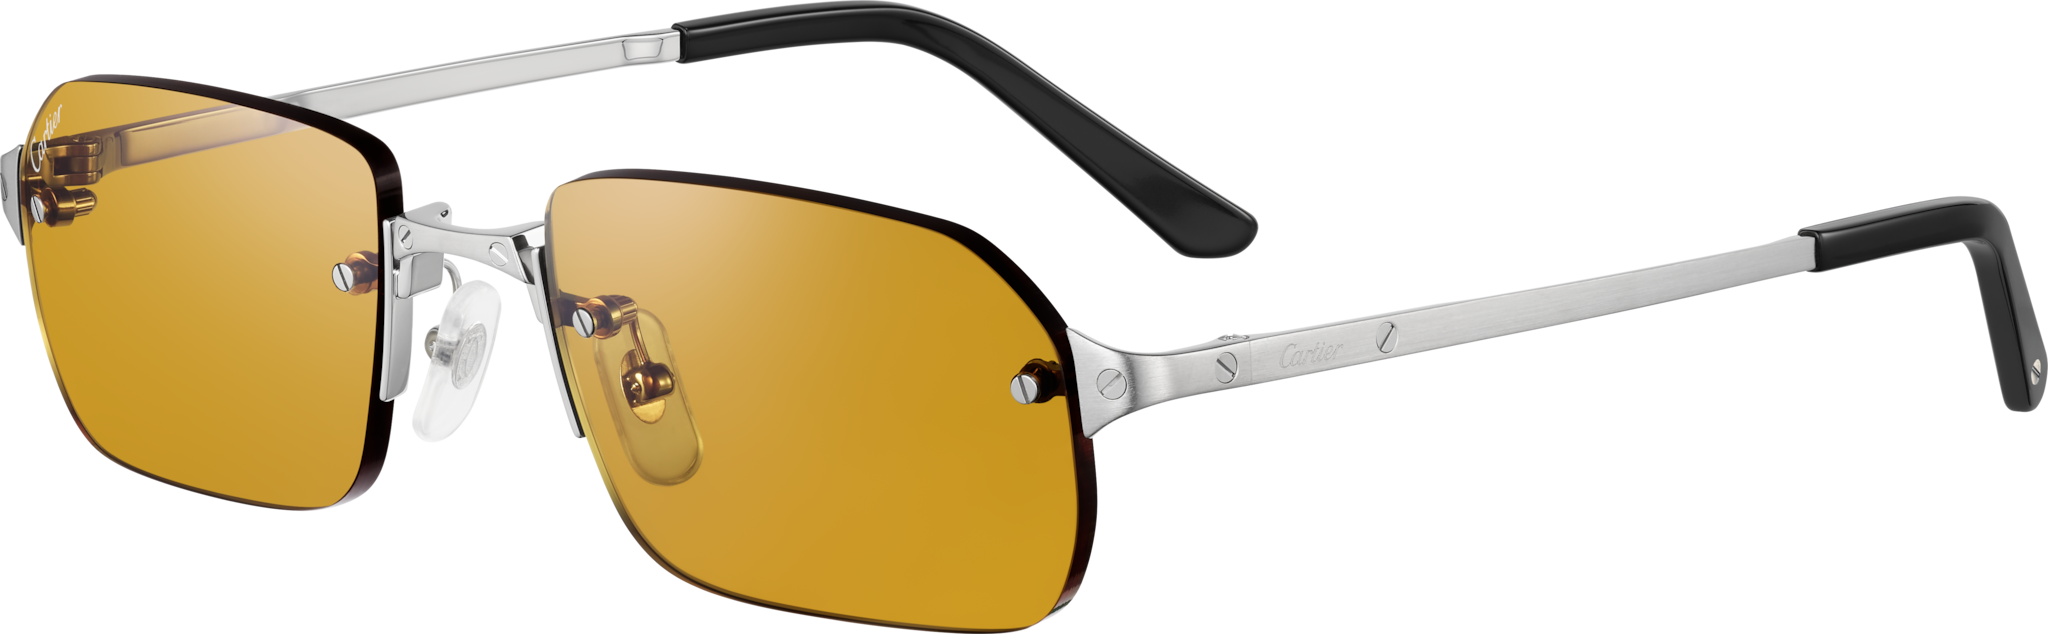 Santos de Cartier SunglassesSmooth and brushed ruthenium finish metal, brown lenses